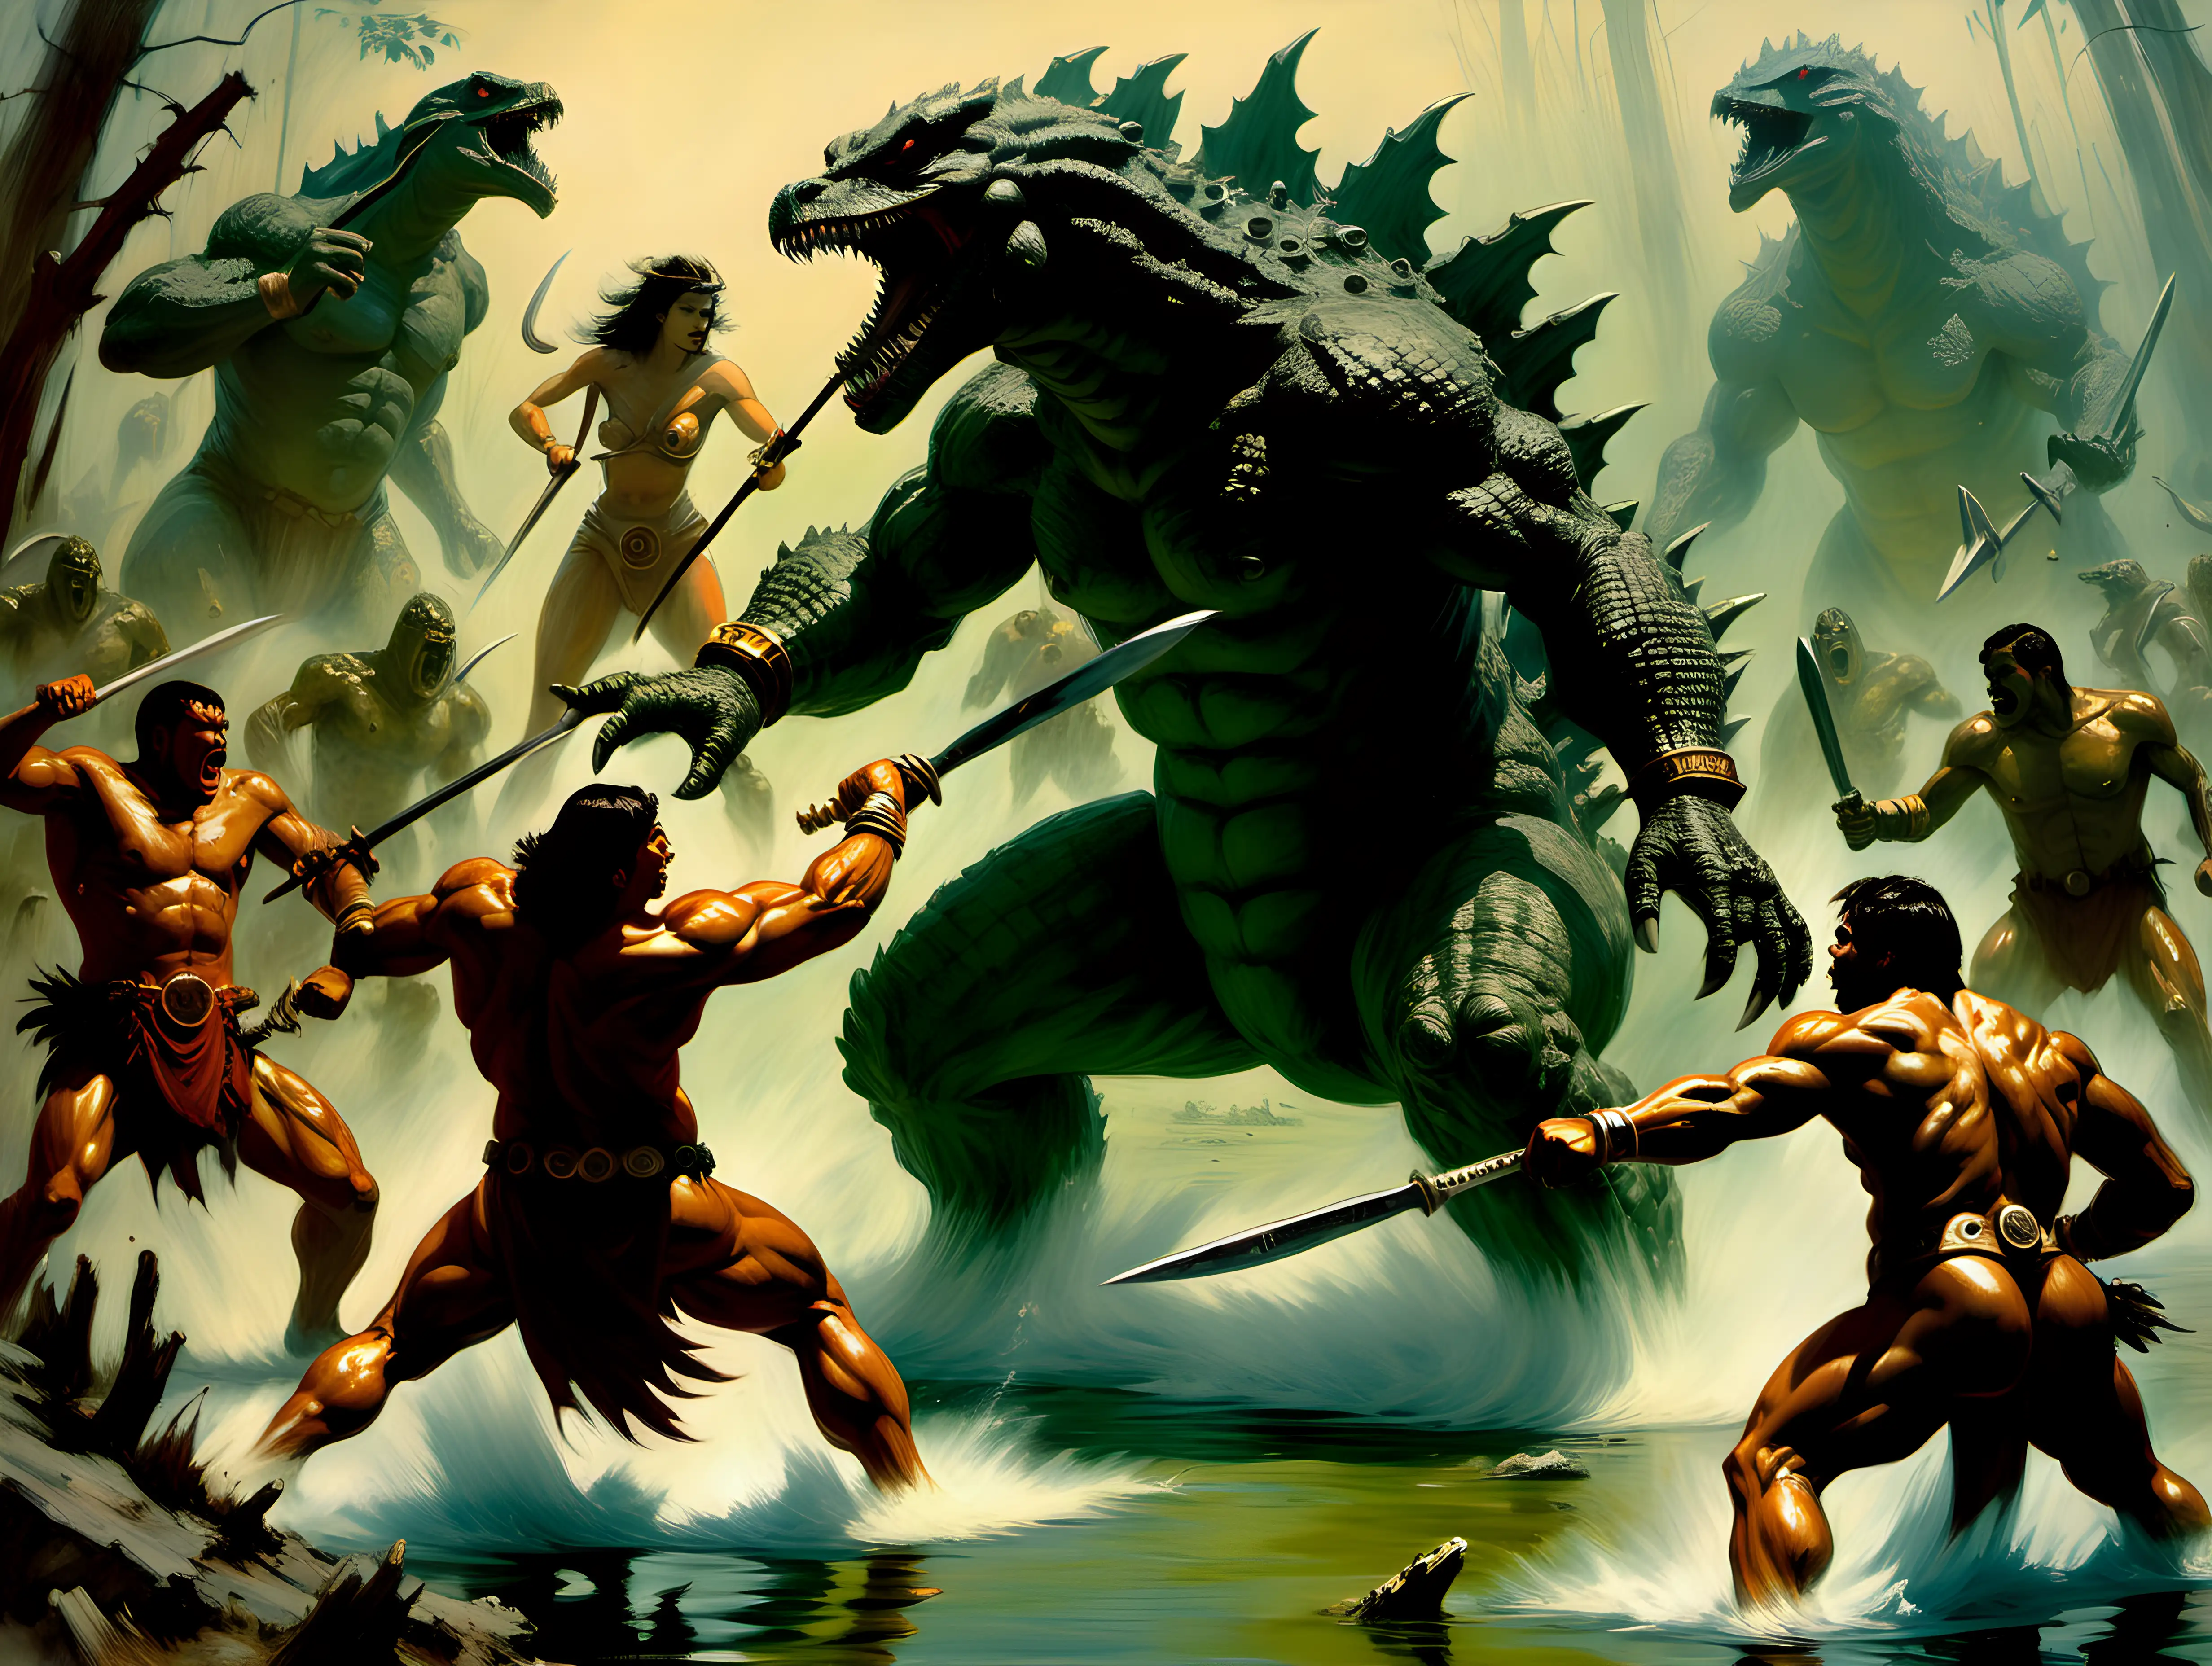 Gladiators fighting Godzilla in ancient swamp Frank Frazetta style